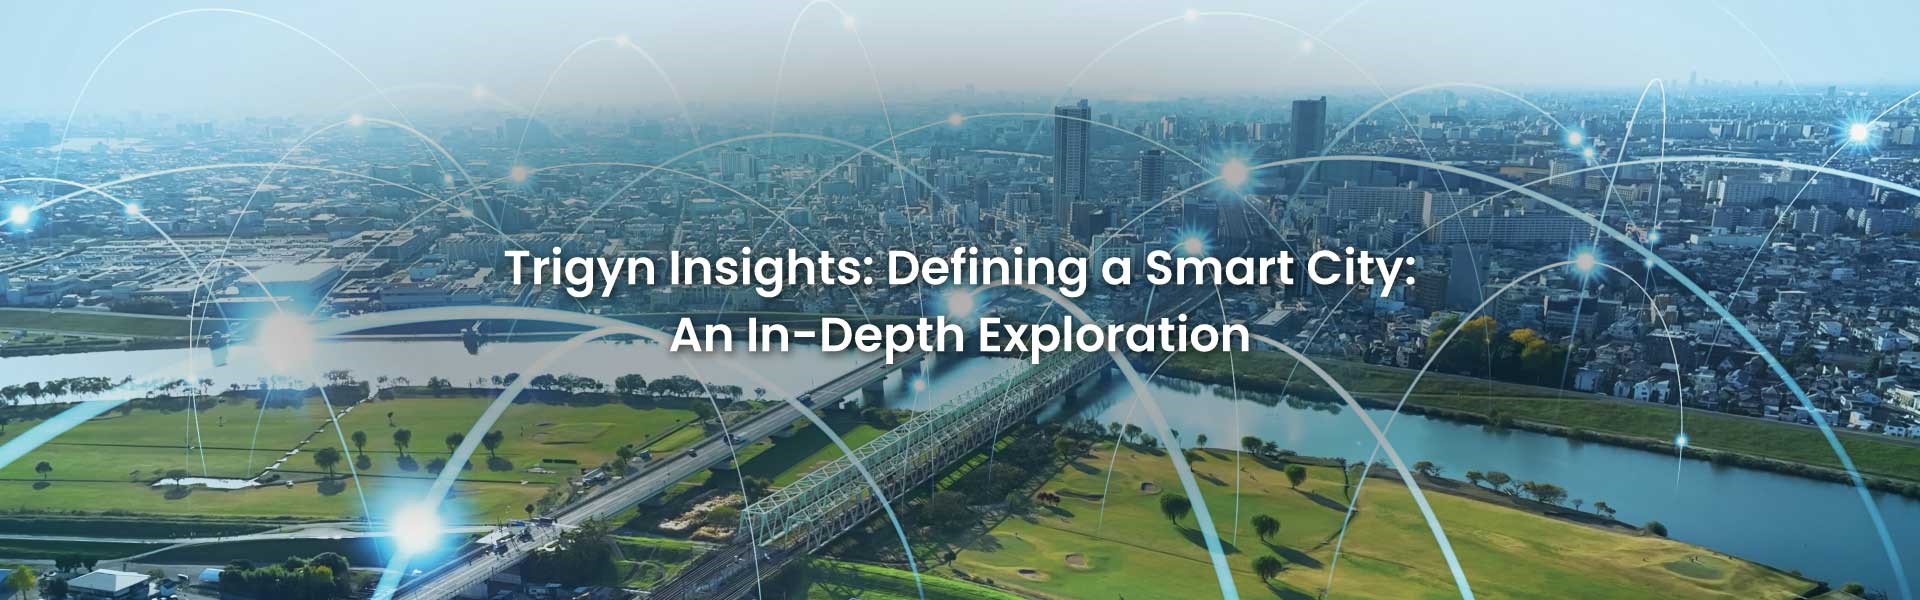 Defining a Smart City